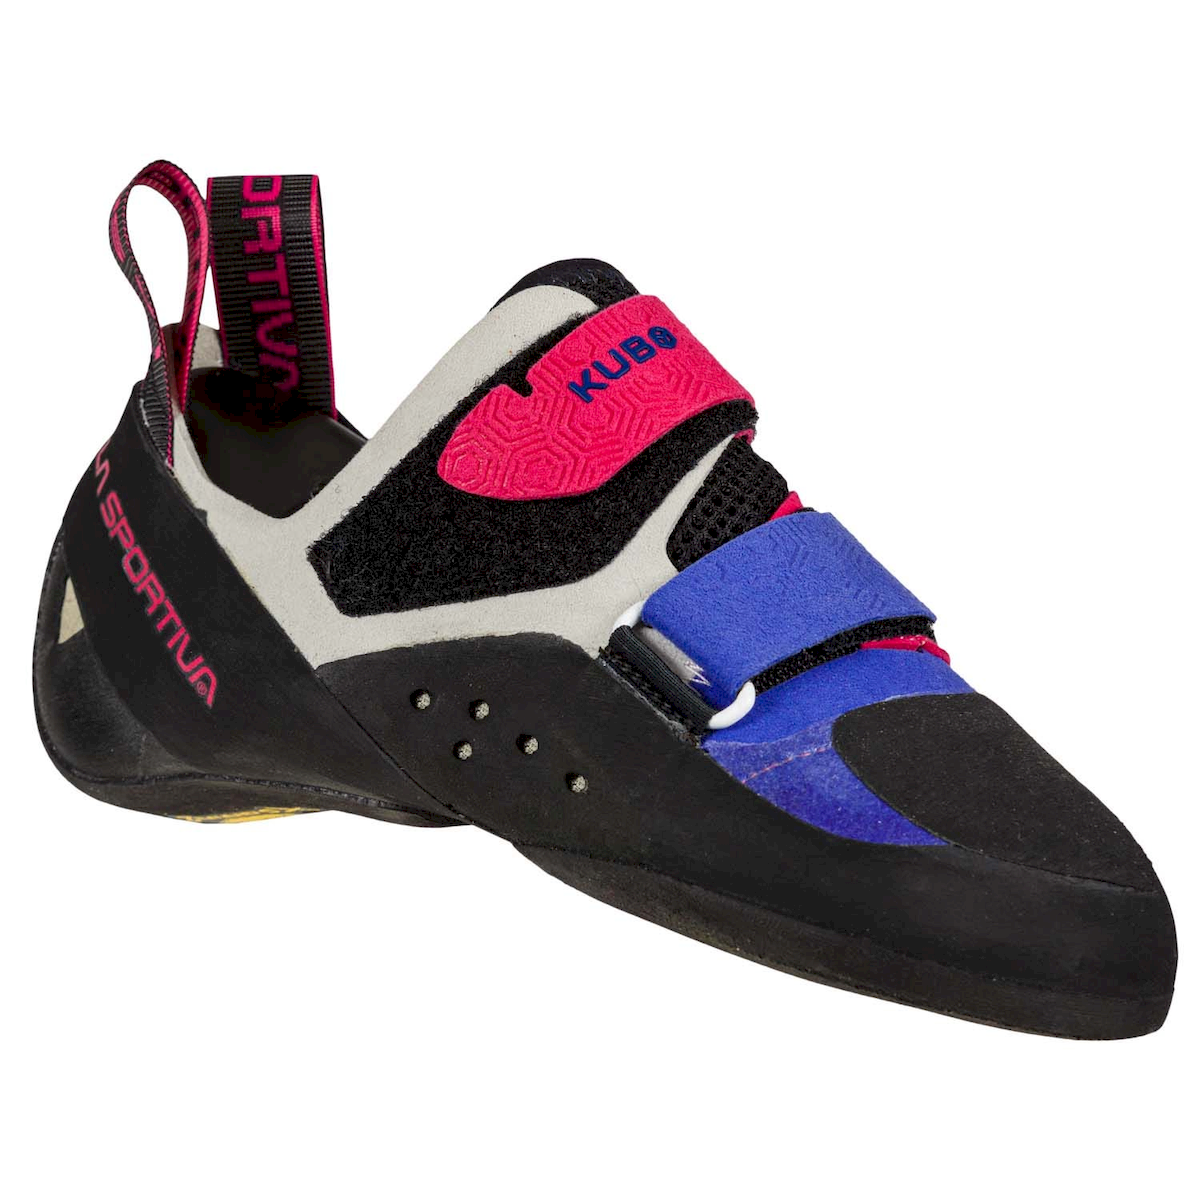 La Sportiva Kubo - Climbing shoes - Women's